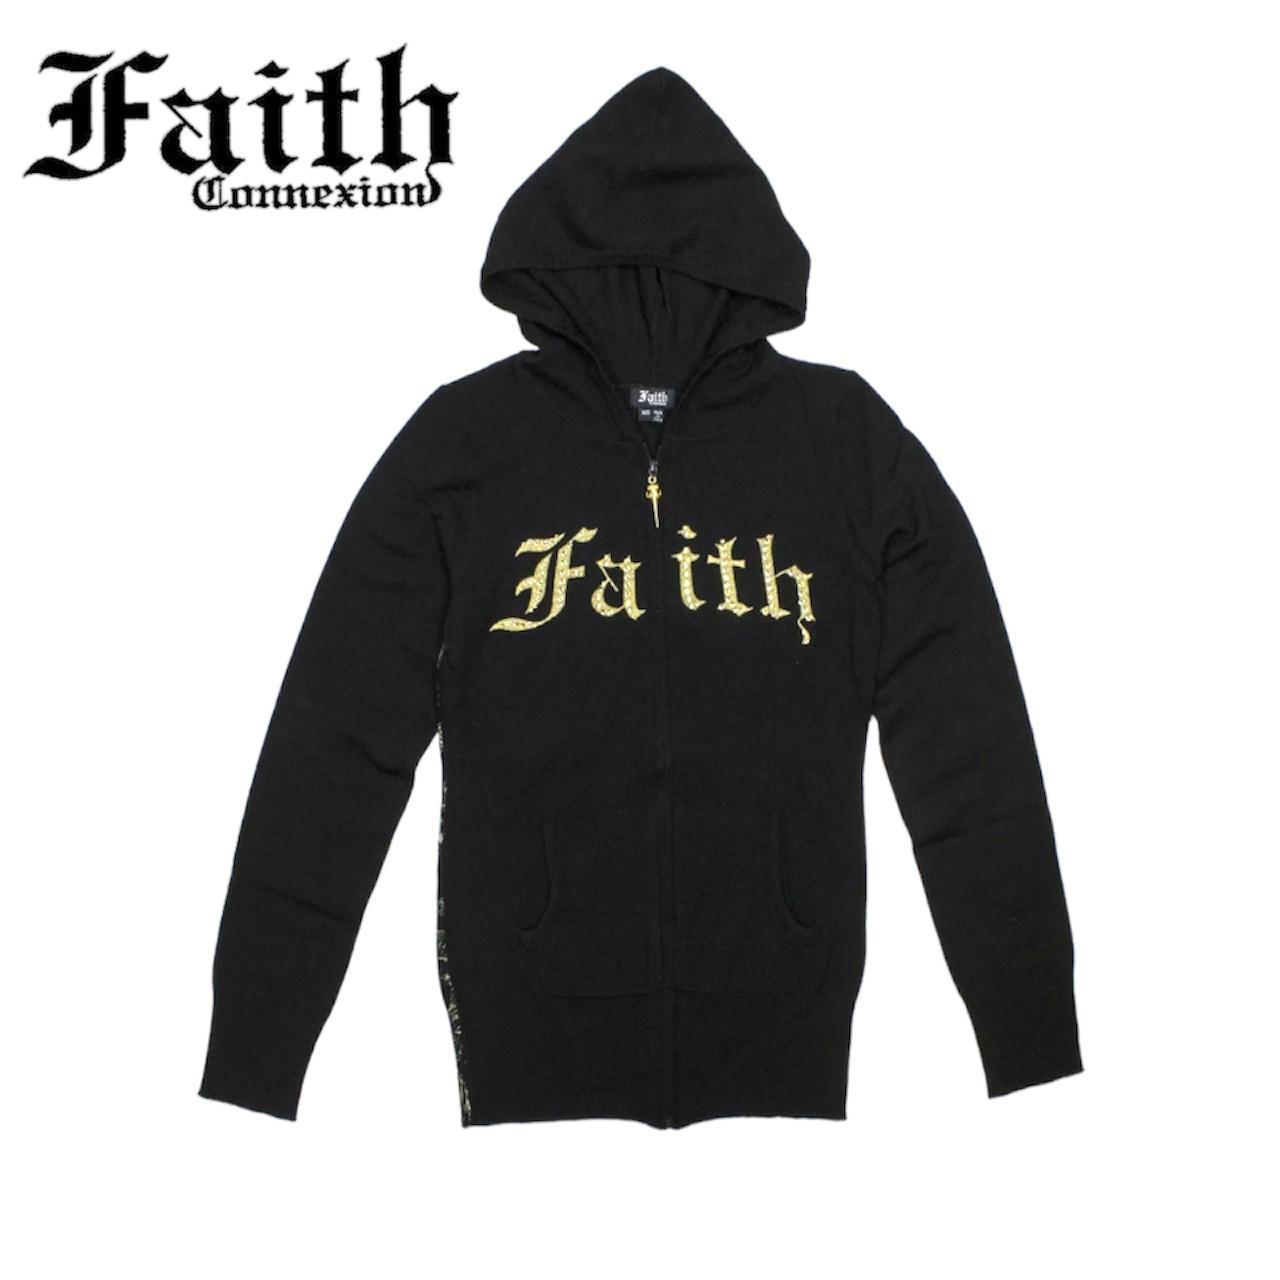 Faith Connexion Women's Black Jumper